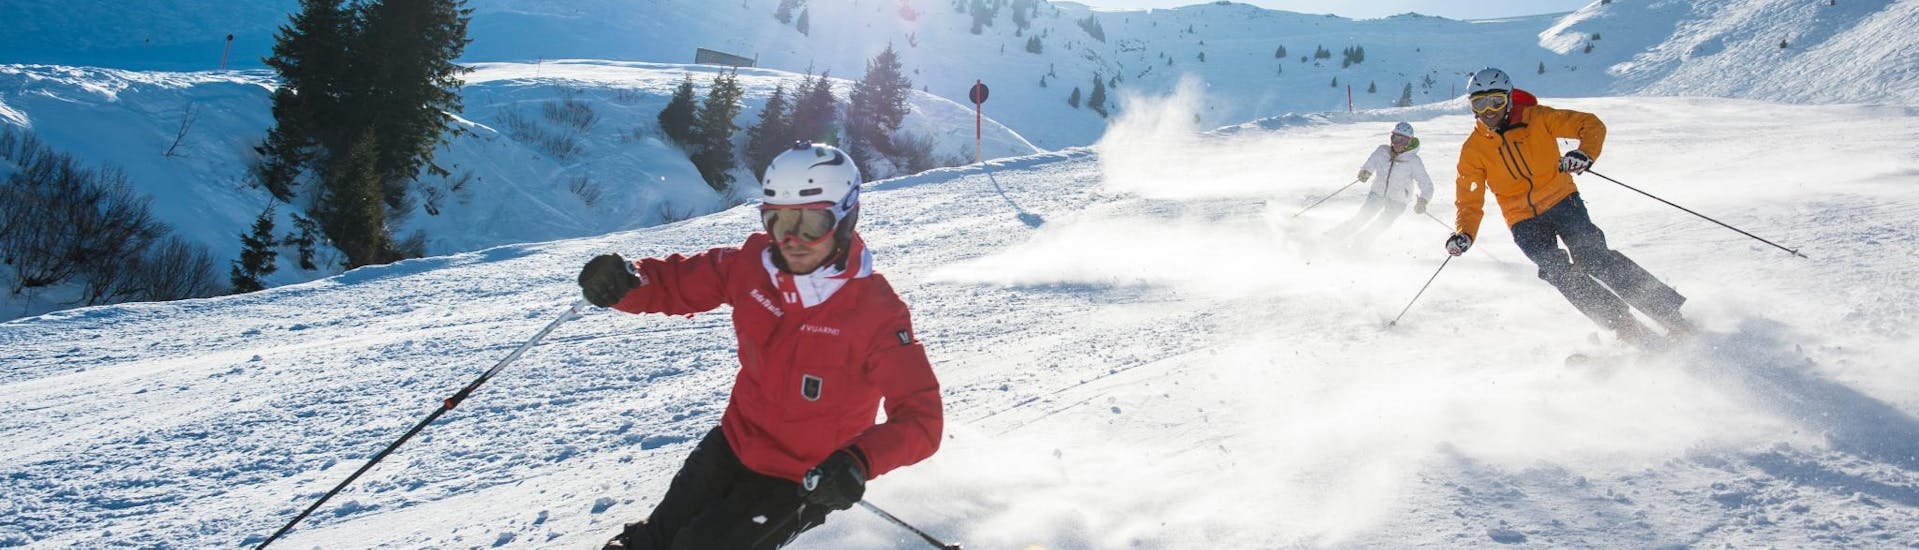 Clases de esquí para adultos con experiencia.